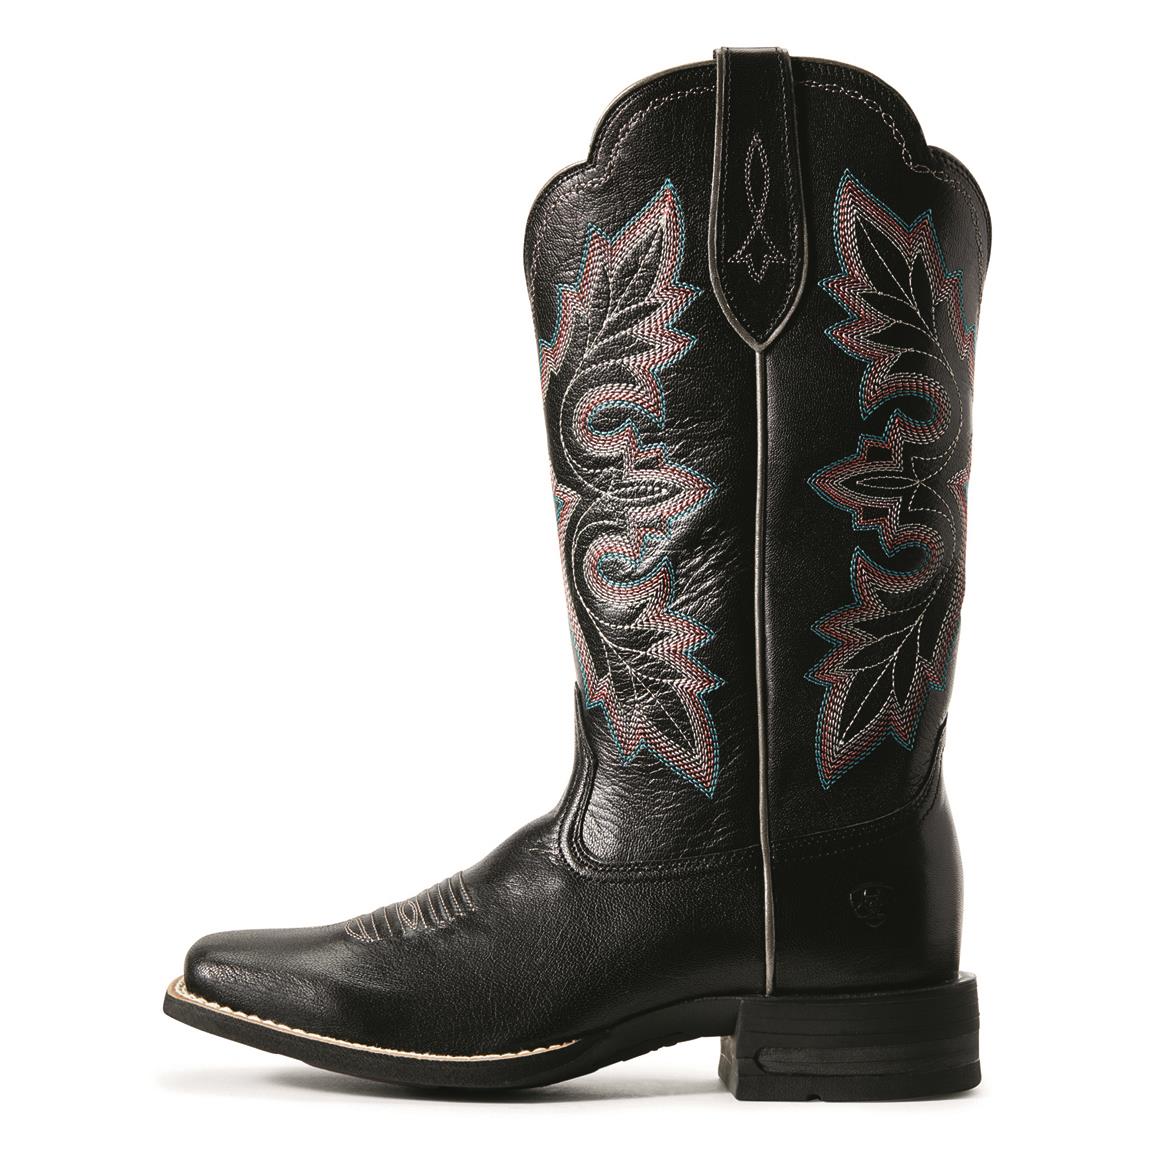 Ariat Women's Breakout Western Boots